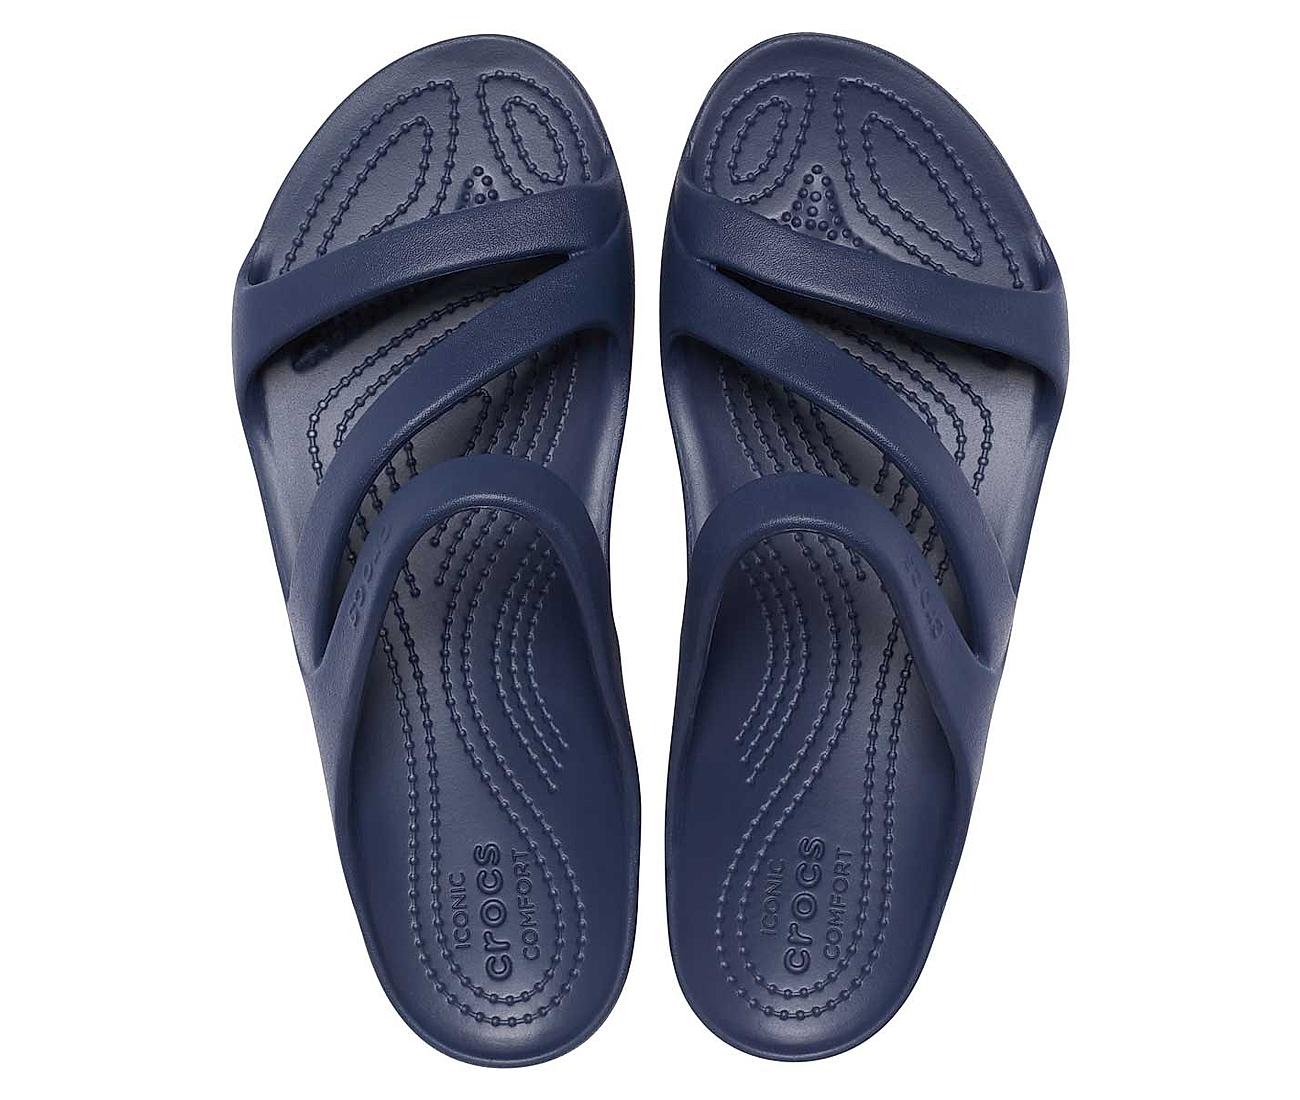 Crocs Lined Slippers for Women | Mercari-thanhphatduhoc.com.vn